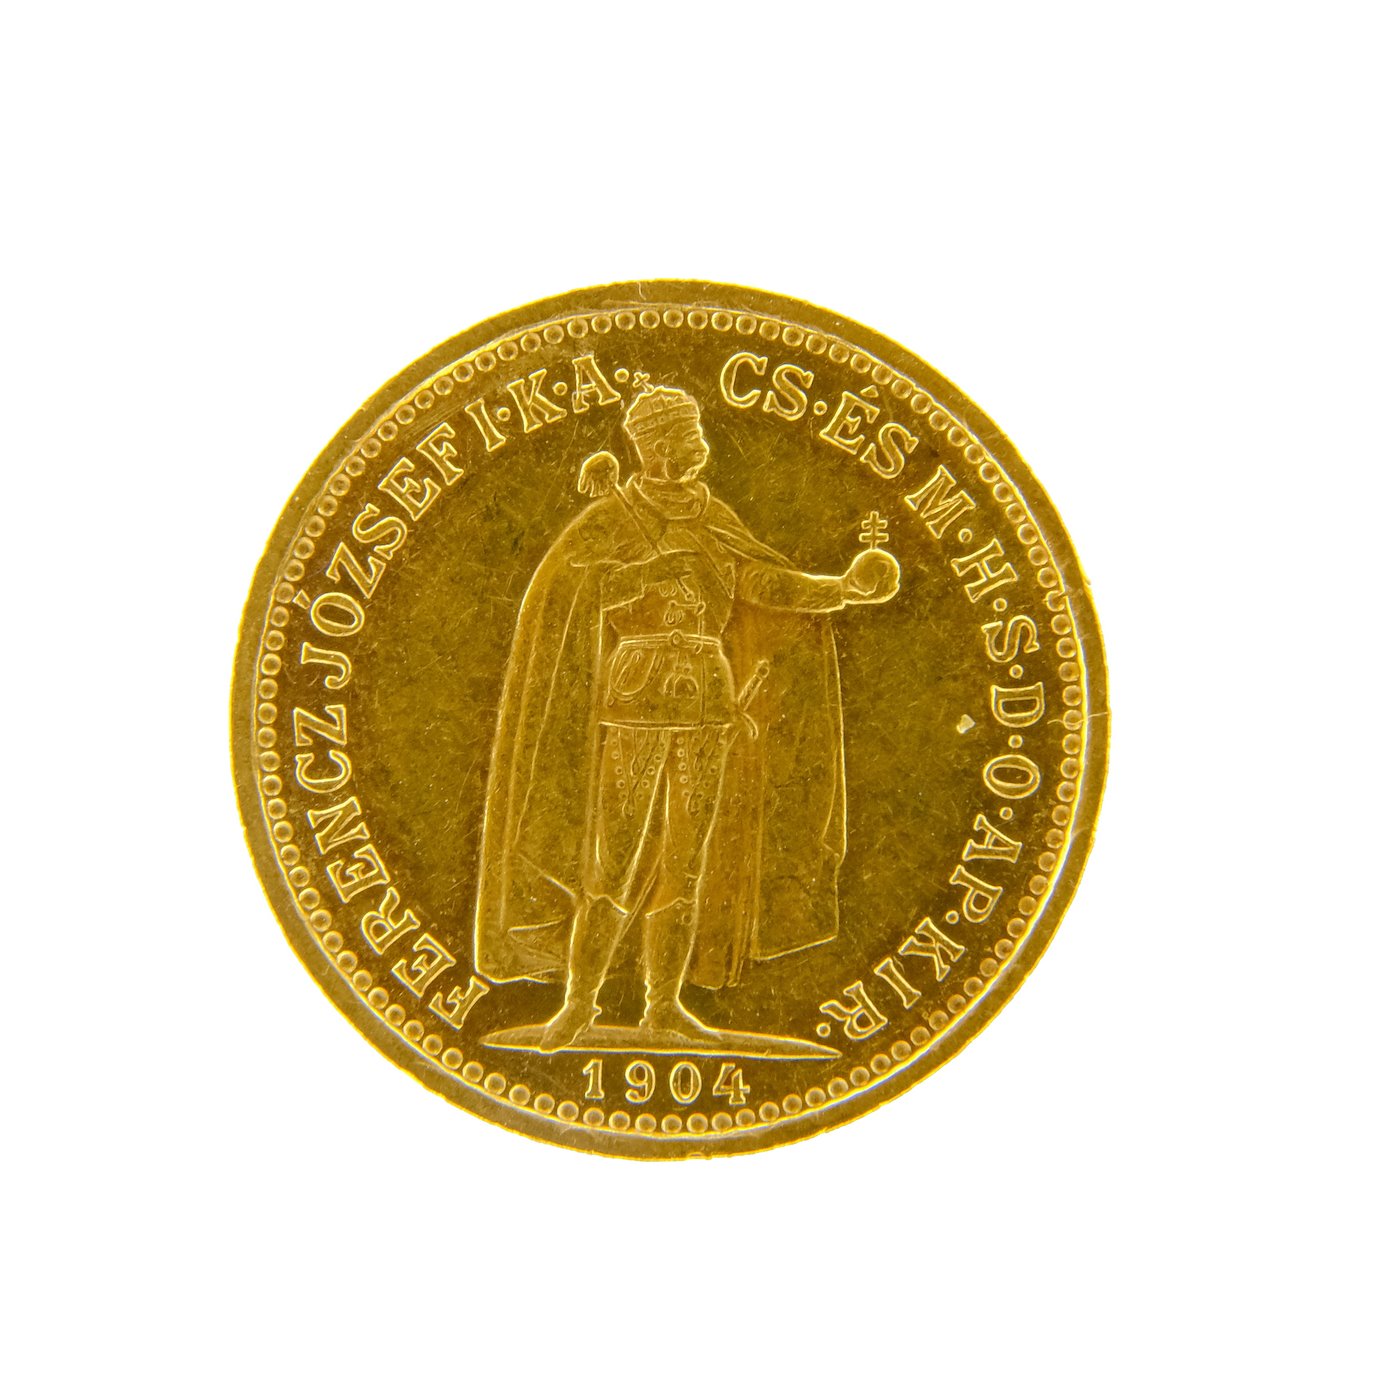 .. - Rakousko Uhersko zlatá 10 Koruna 1904 K.B. uherská,  zlato 900/1000, hrubá hmotnost 3,387g